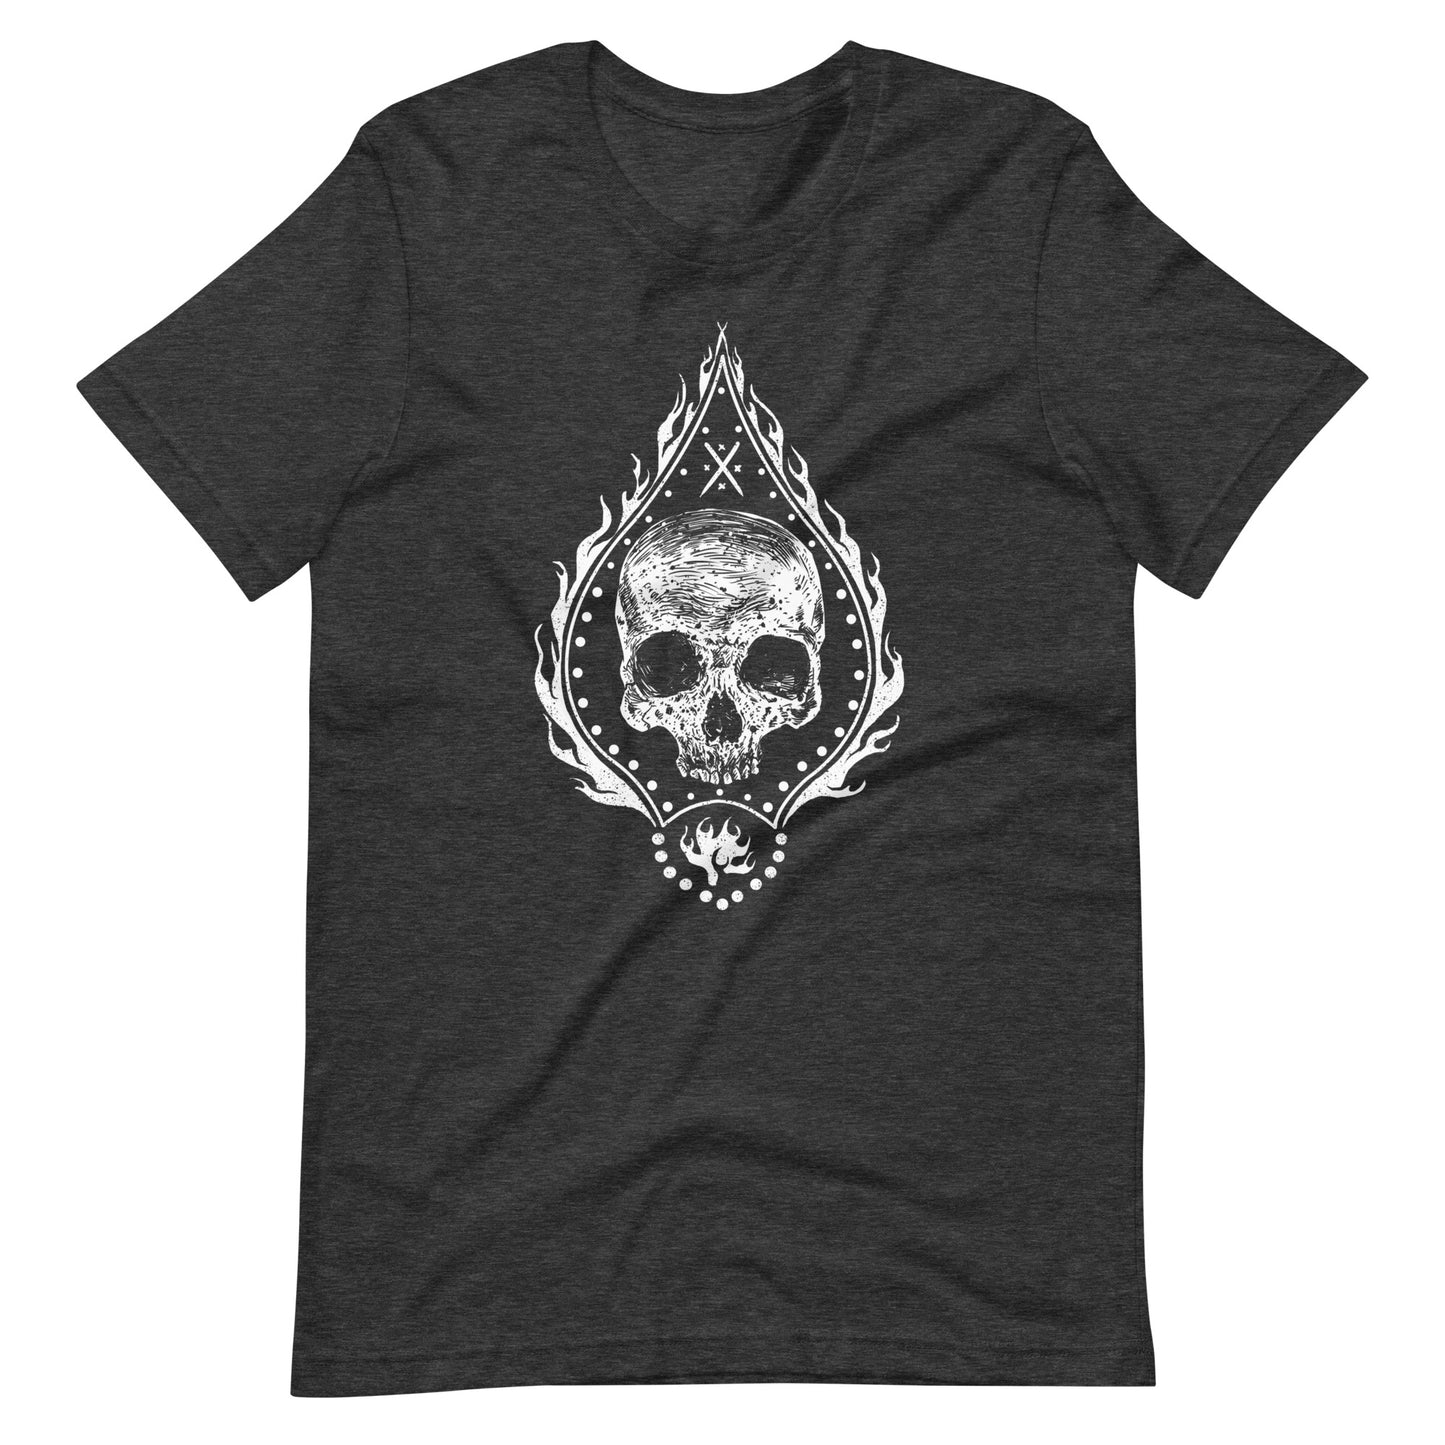 Fire Skull White - Men's t-shirt - Dark Grey Heather Front